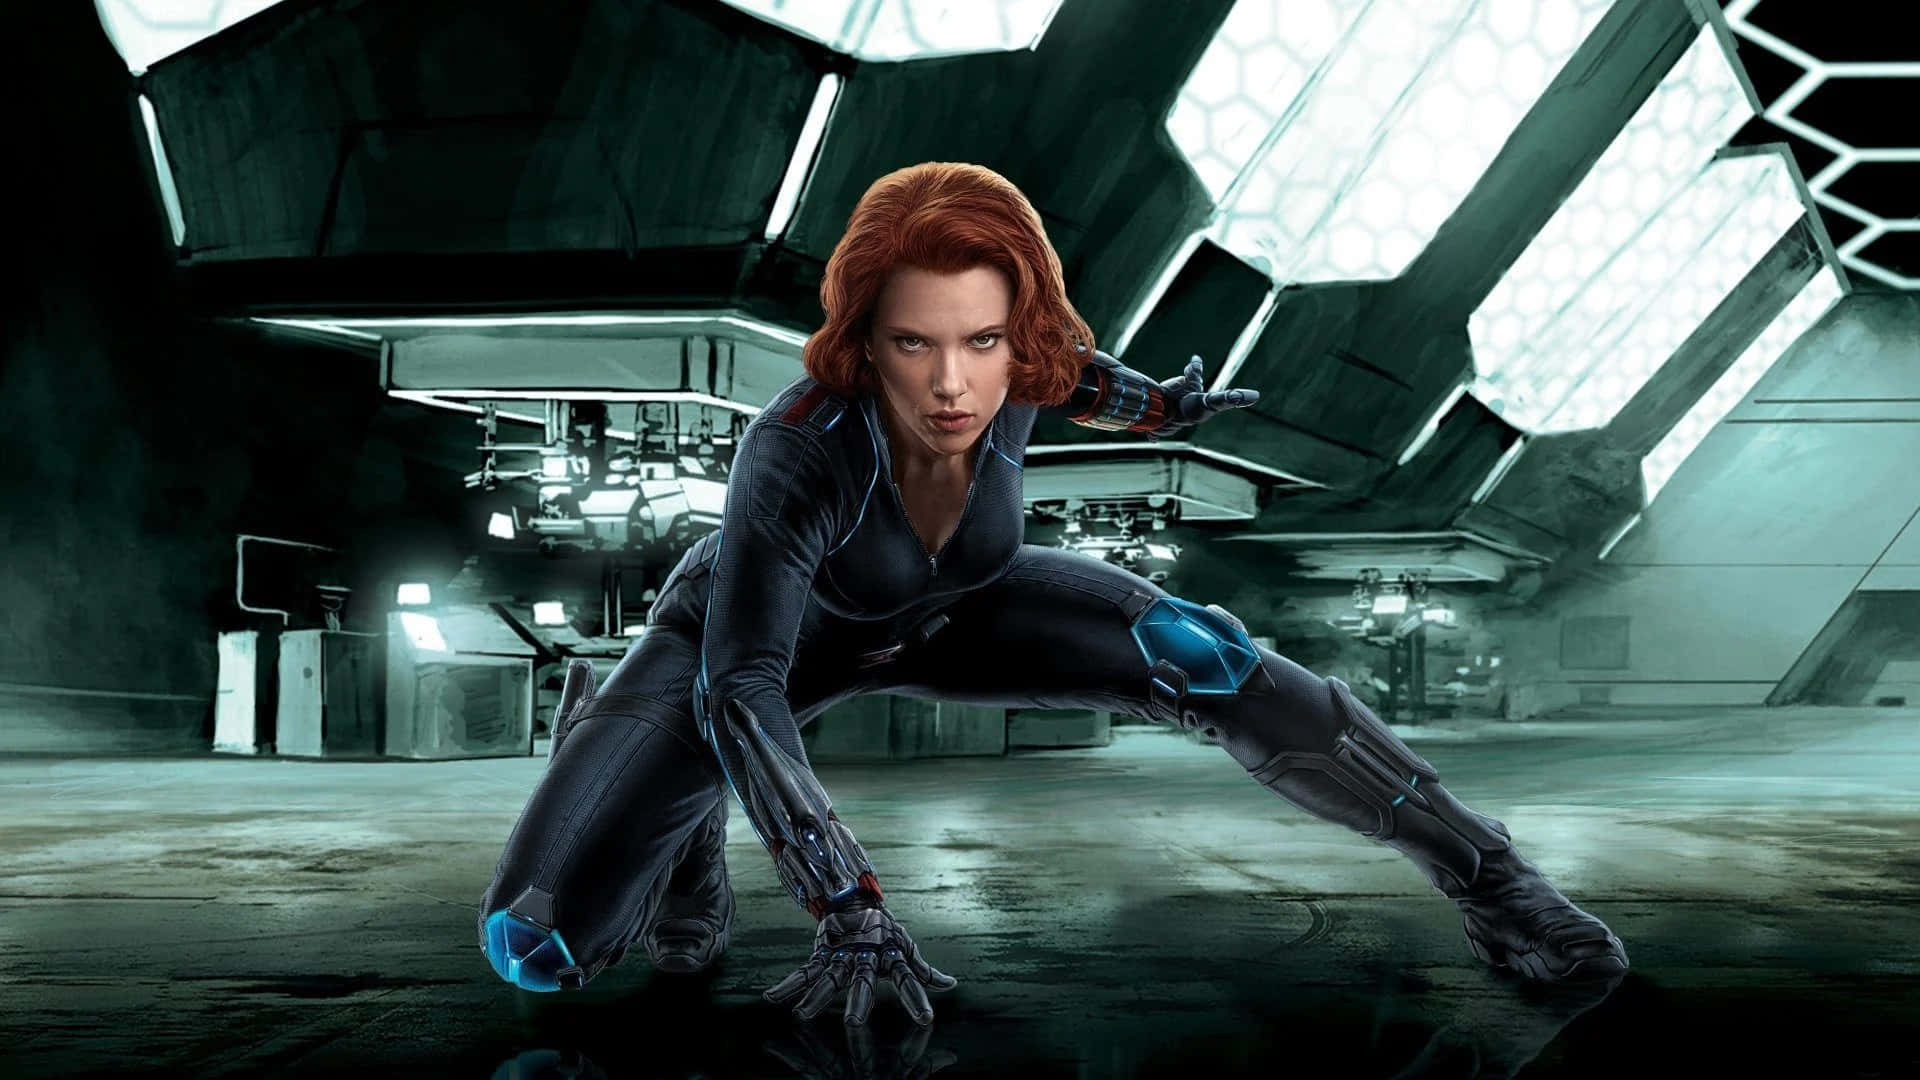 Avenger Natasha Romanoff Joins the Fight" Wallpaper